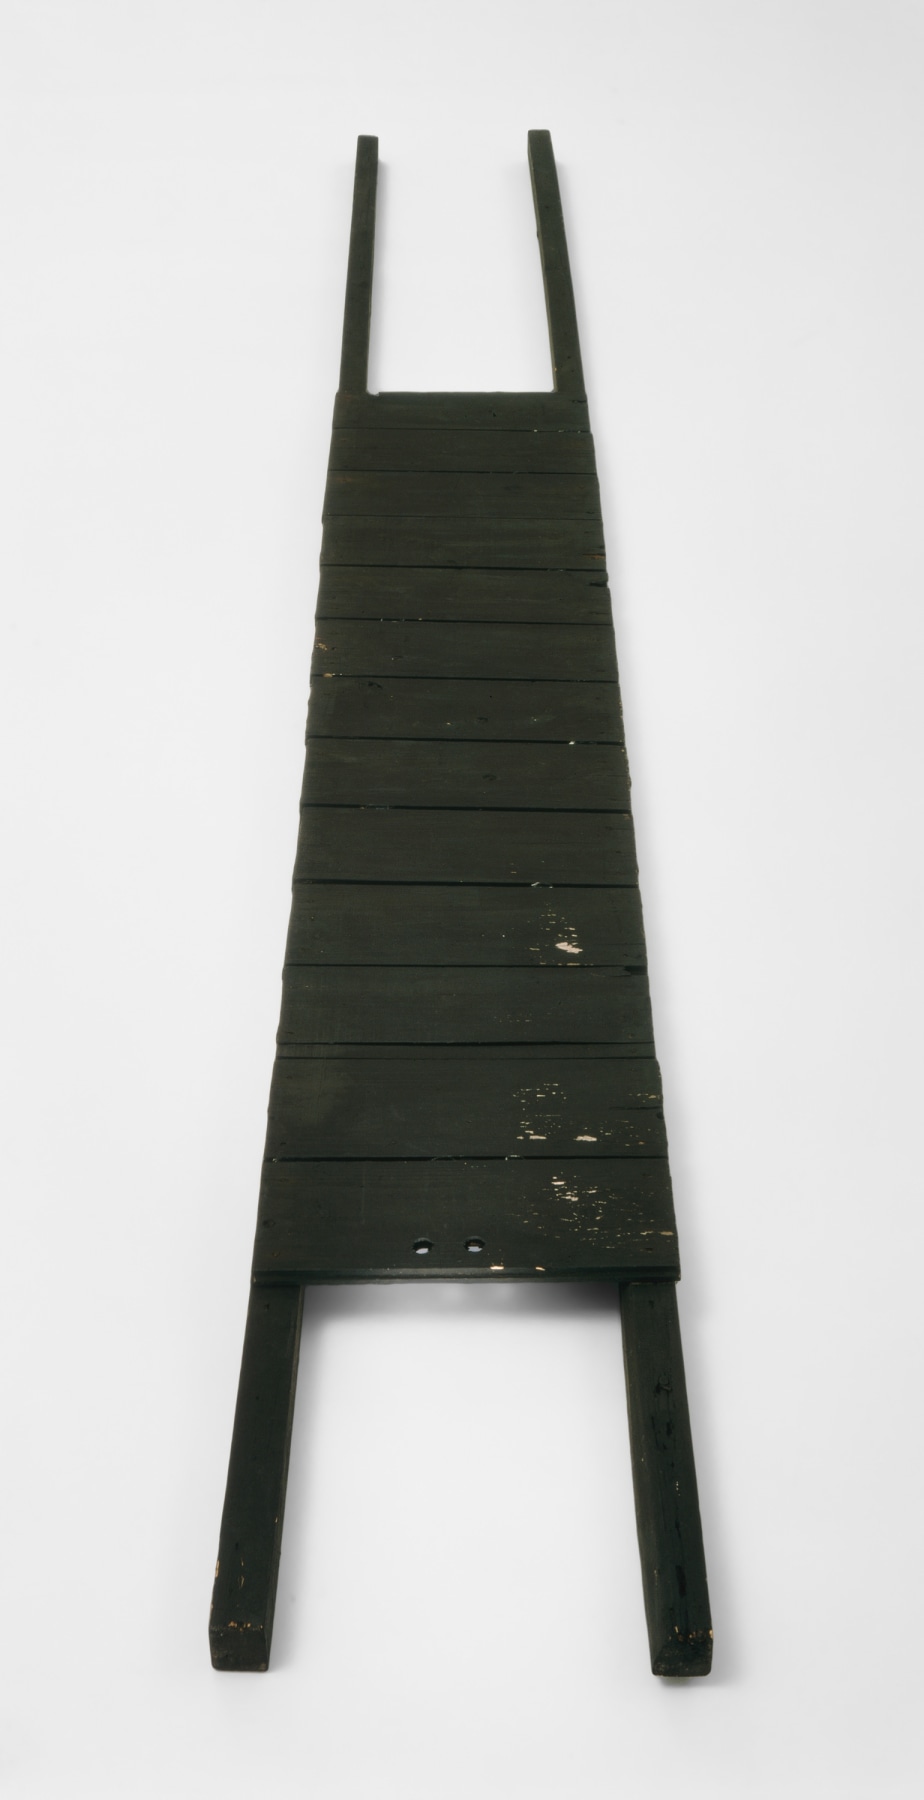 James Lee Byars

&amp;ldquo;Untitled (Black Figure)&amp;rdquo;, ca. 1959

Painted wood

138 x 16 x 2 3/4 inches

350.5 x 40.5 x 7 cm

JB 1/Q

$500,000

ON RESERVE&amp;nbsp;